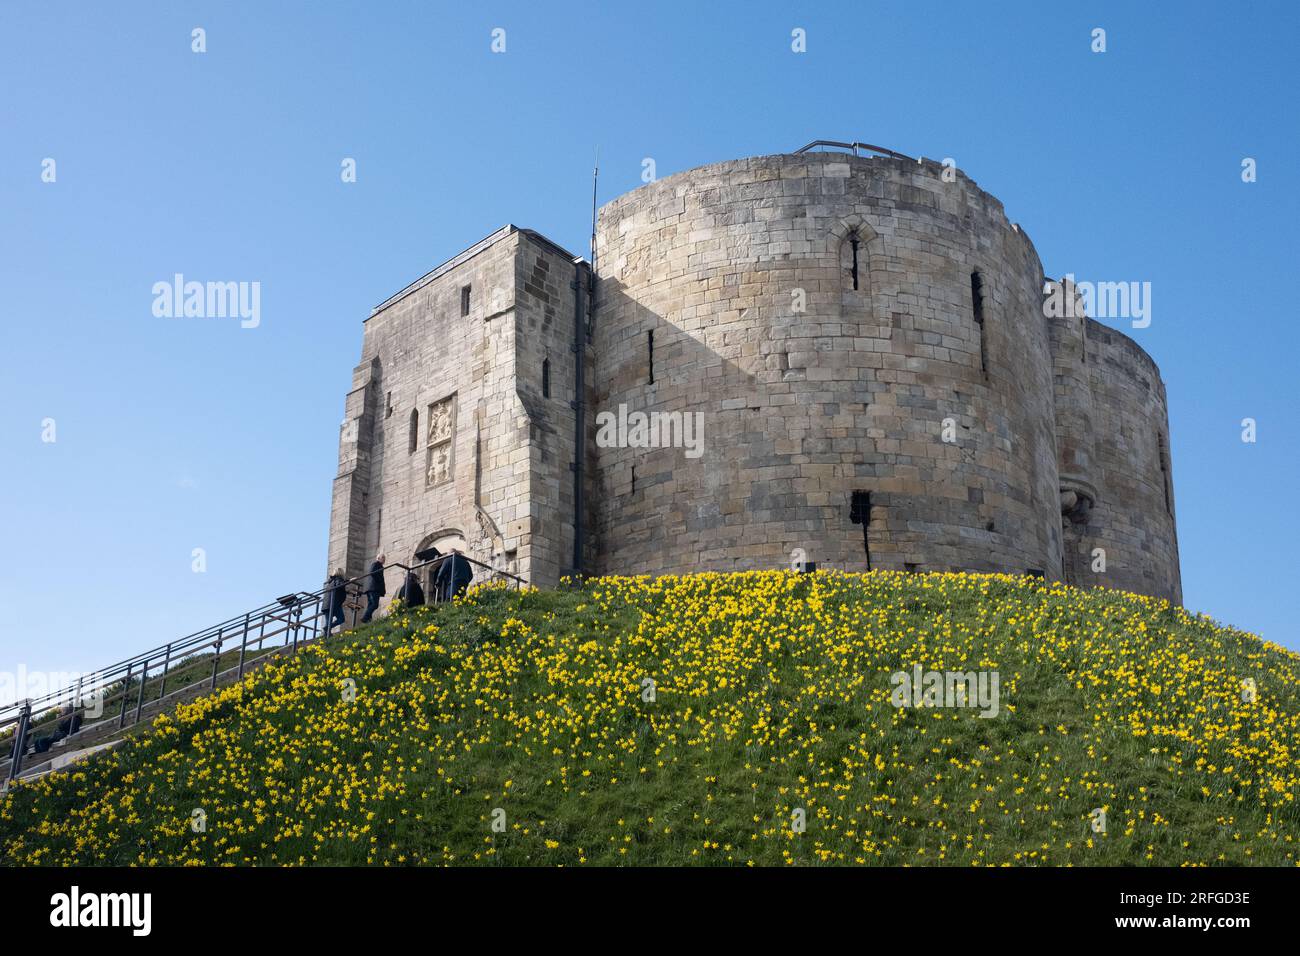 Clifford es Tower, York Castle, York, North Yorkshire, England, UK Stockfoto